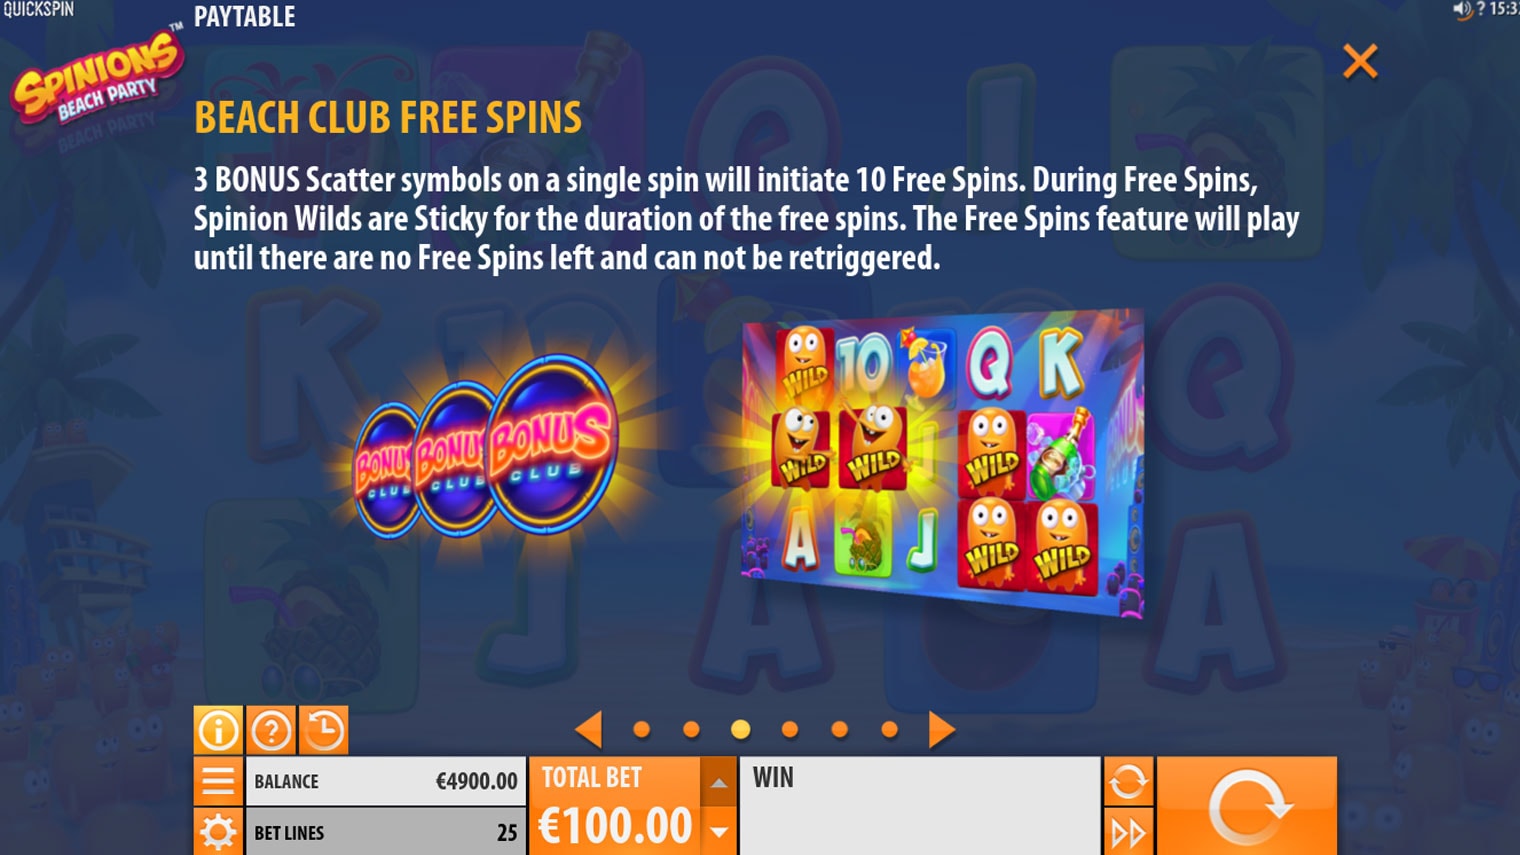 Spinions Beach Party screenshot